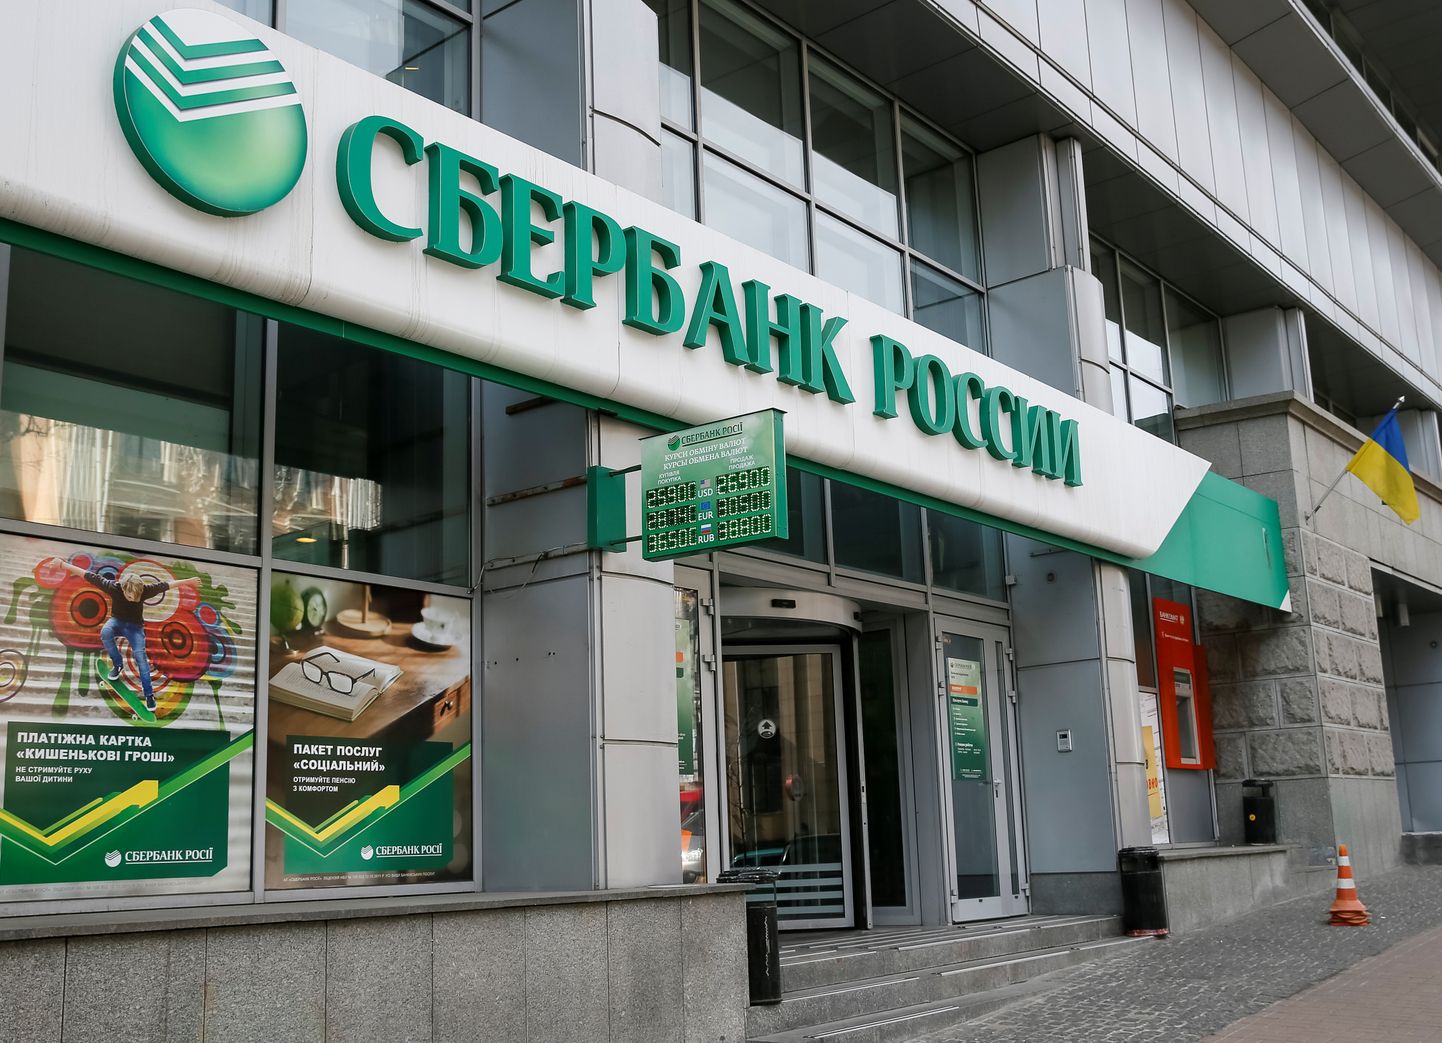 Sberbanki kontor Kiievis 16. märtsil 2016.